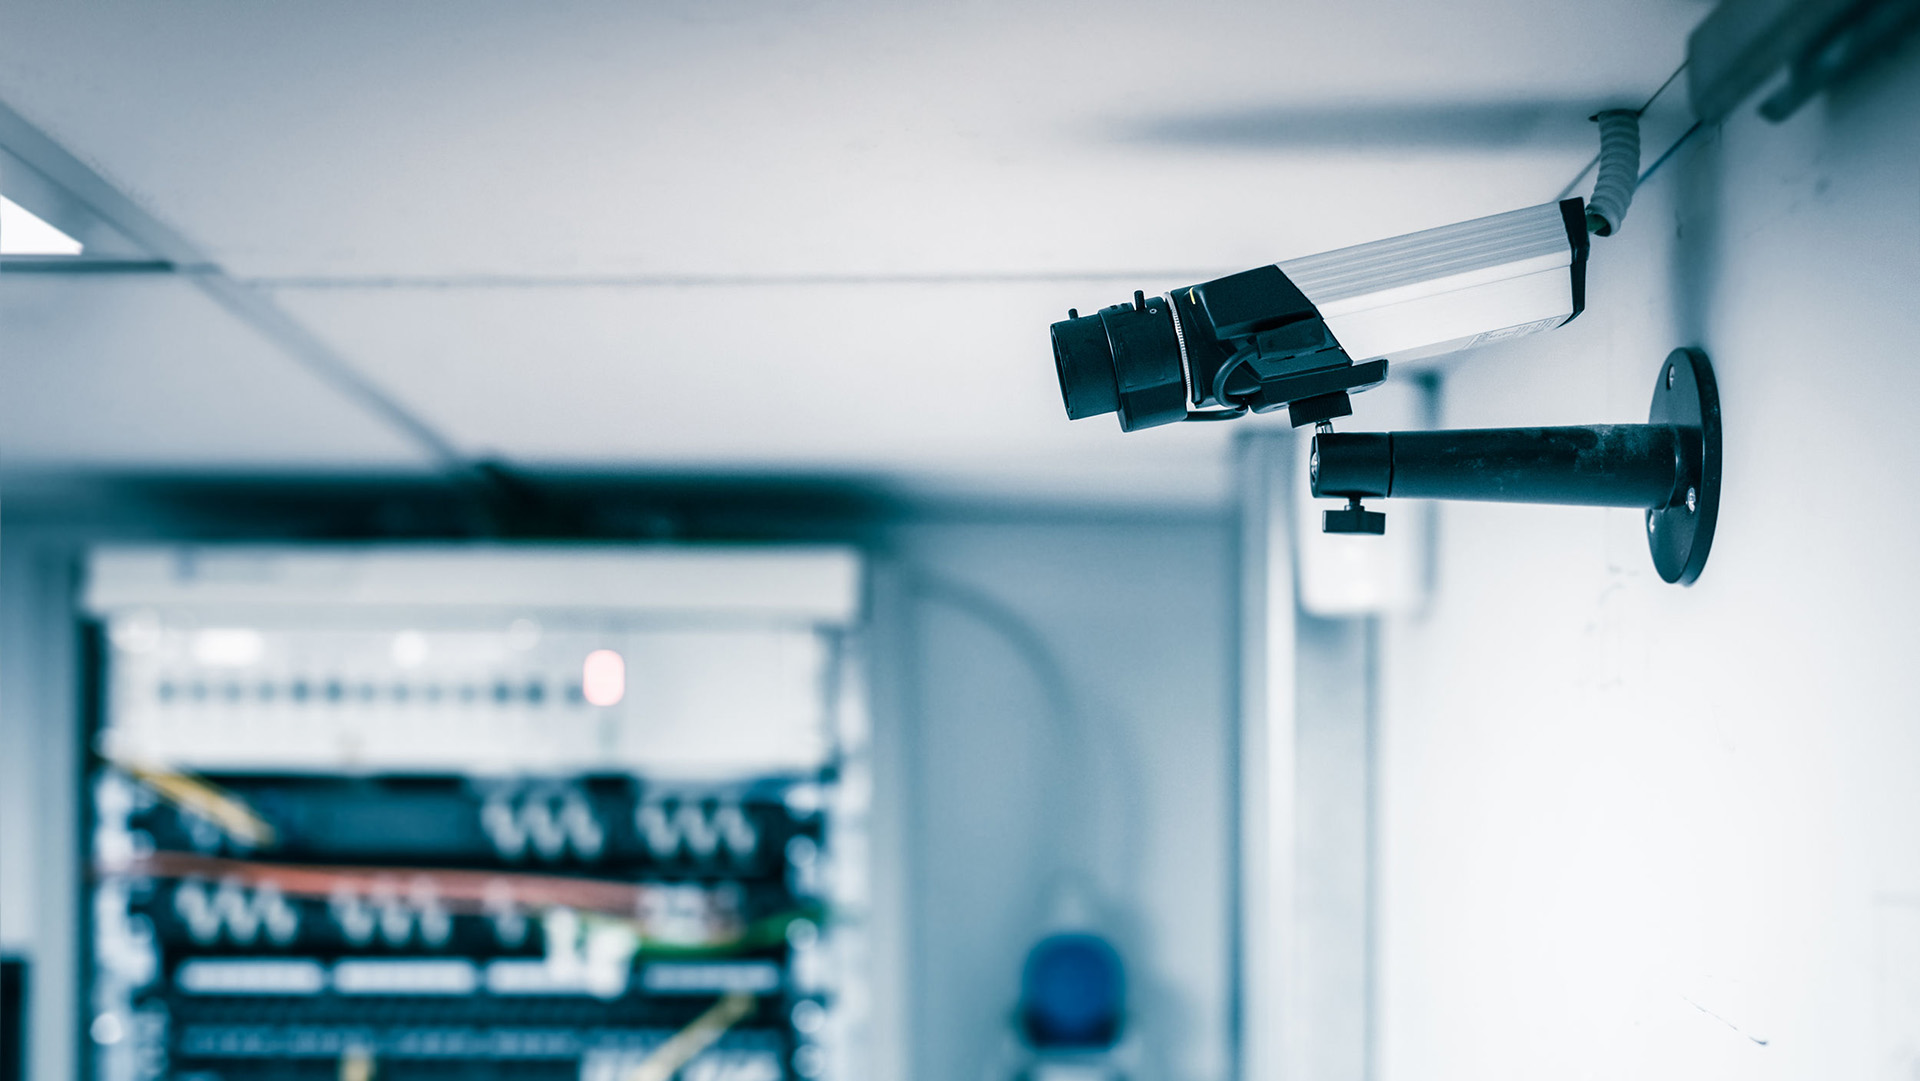 security systems alarm video surveillance